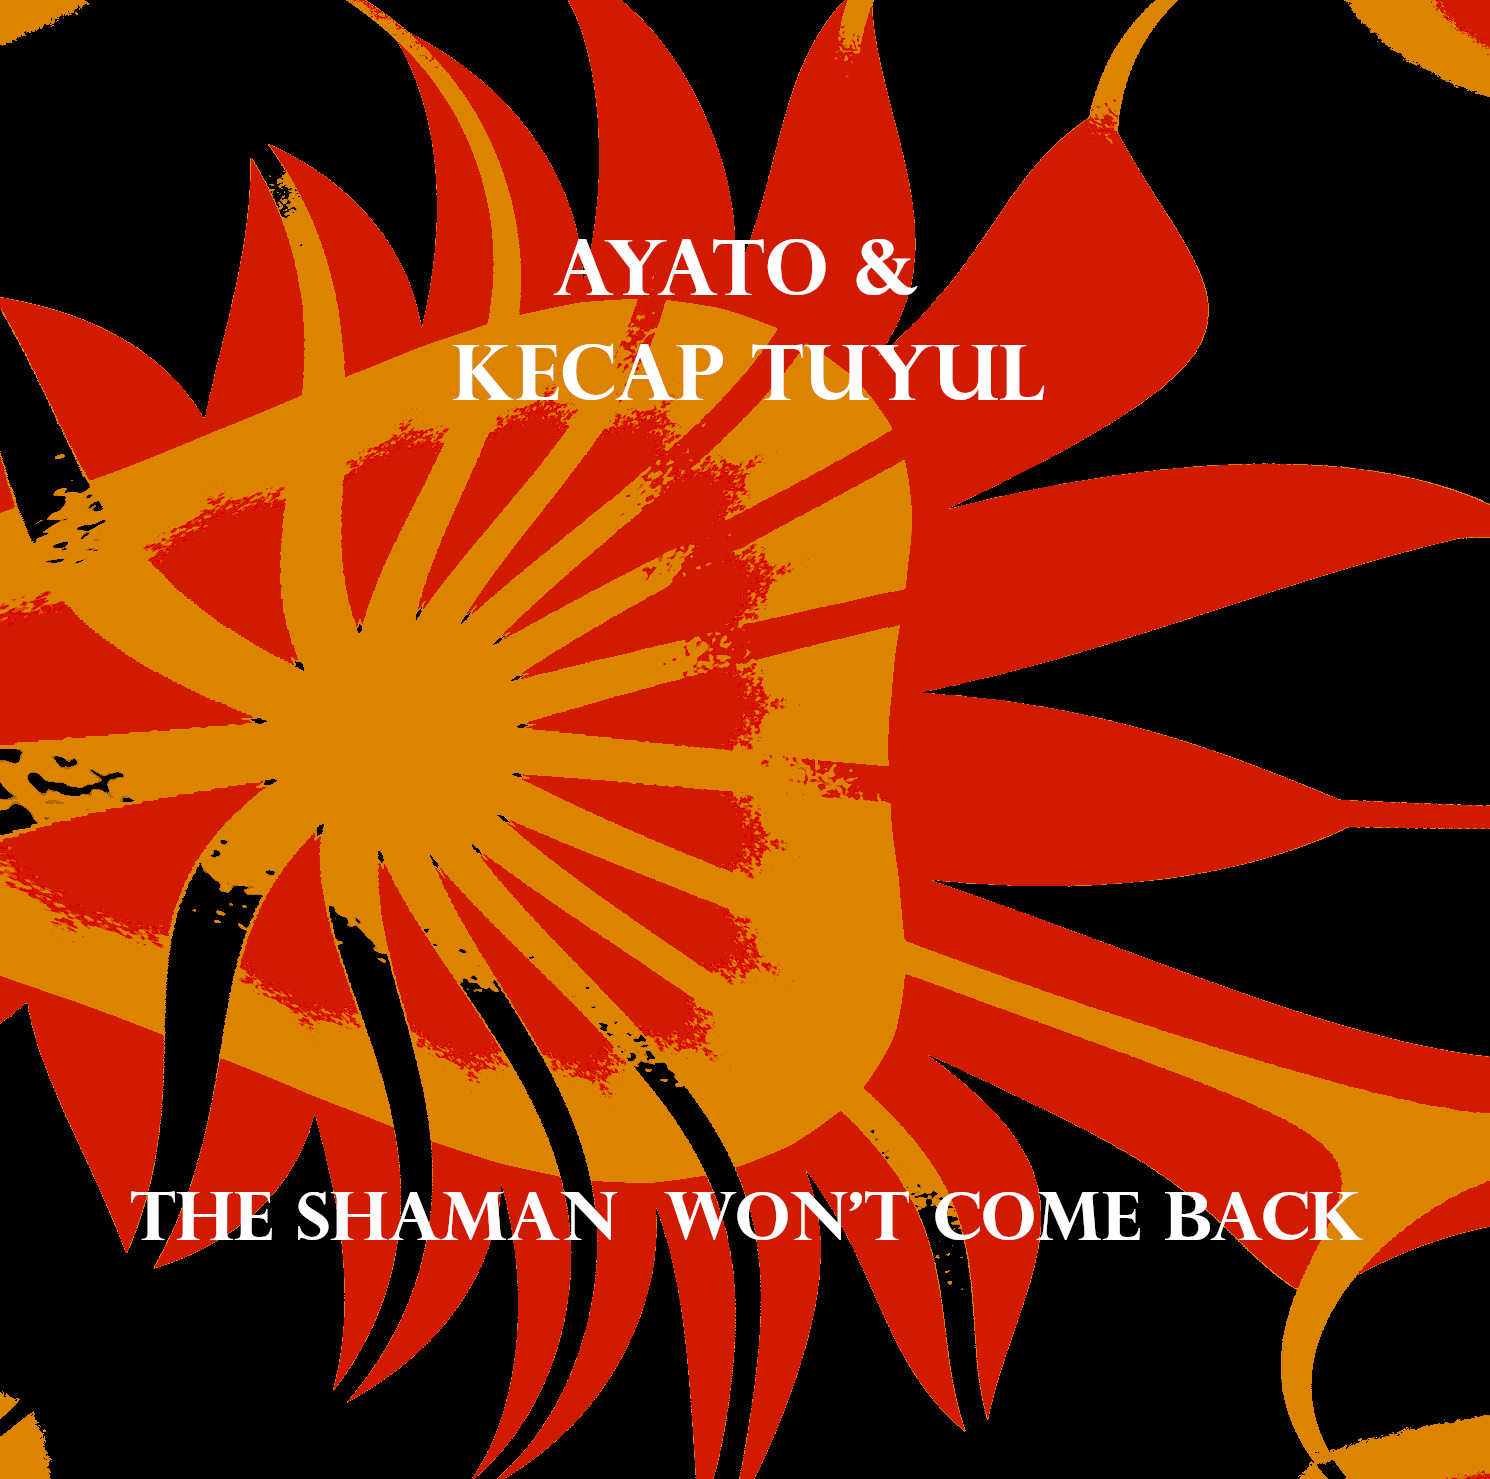 Ayato & Kecap Tuyul – The shaman wonât come back